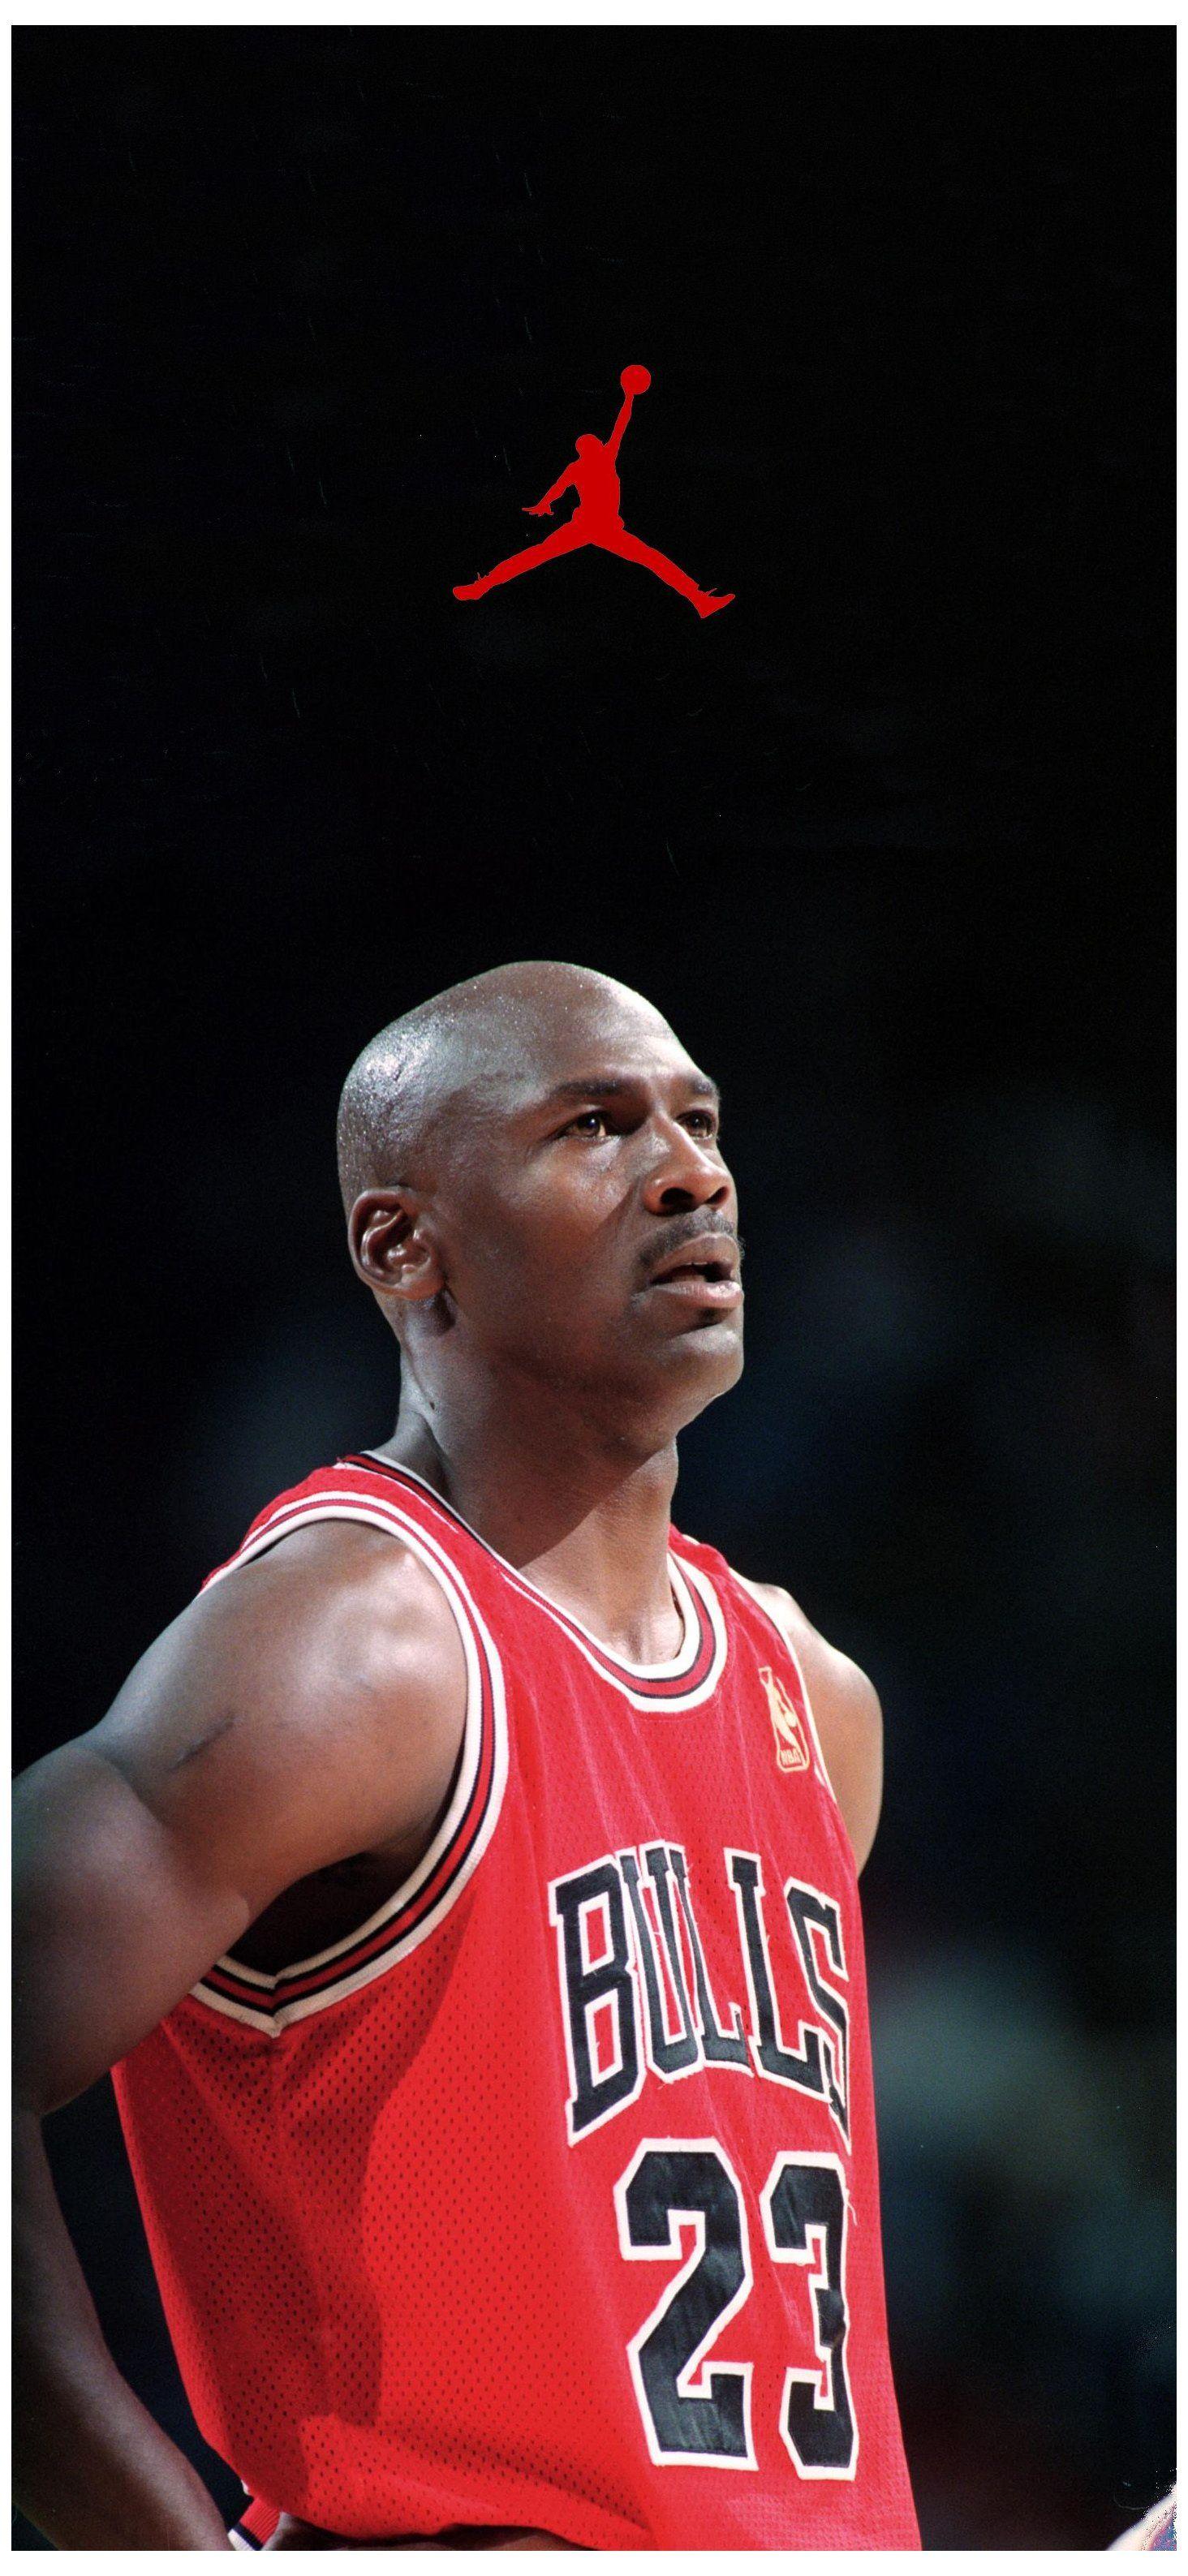 White And Red Bulls NBA Jersey Wallpaper, Basketball, Nike, Michael Jordan  - Wallpaperforu